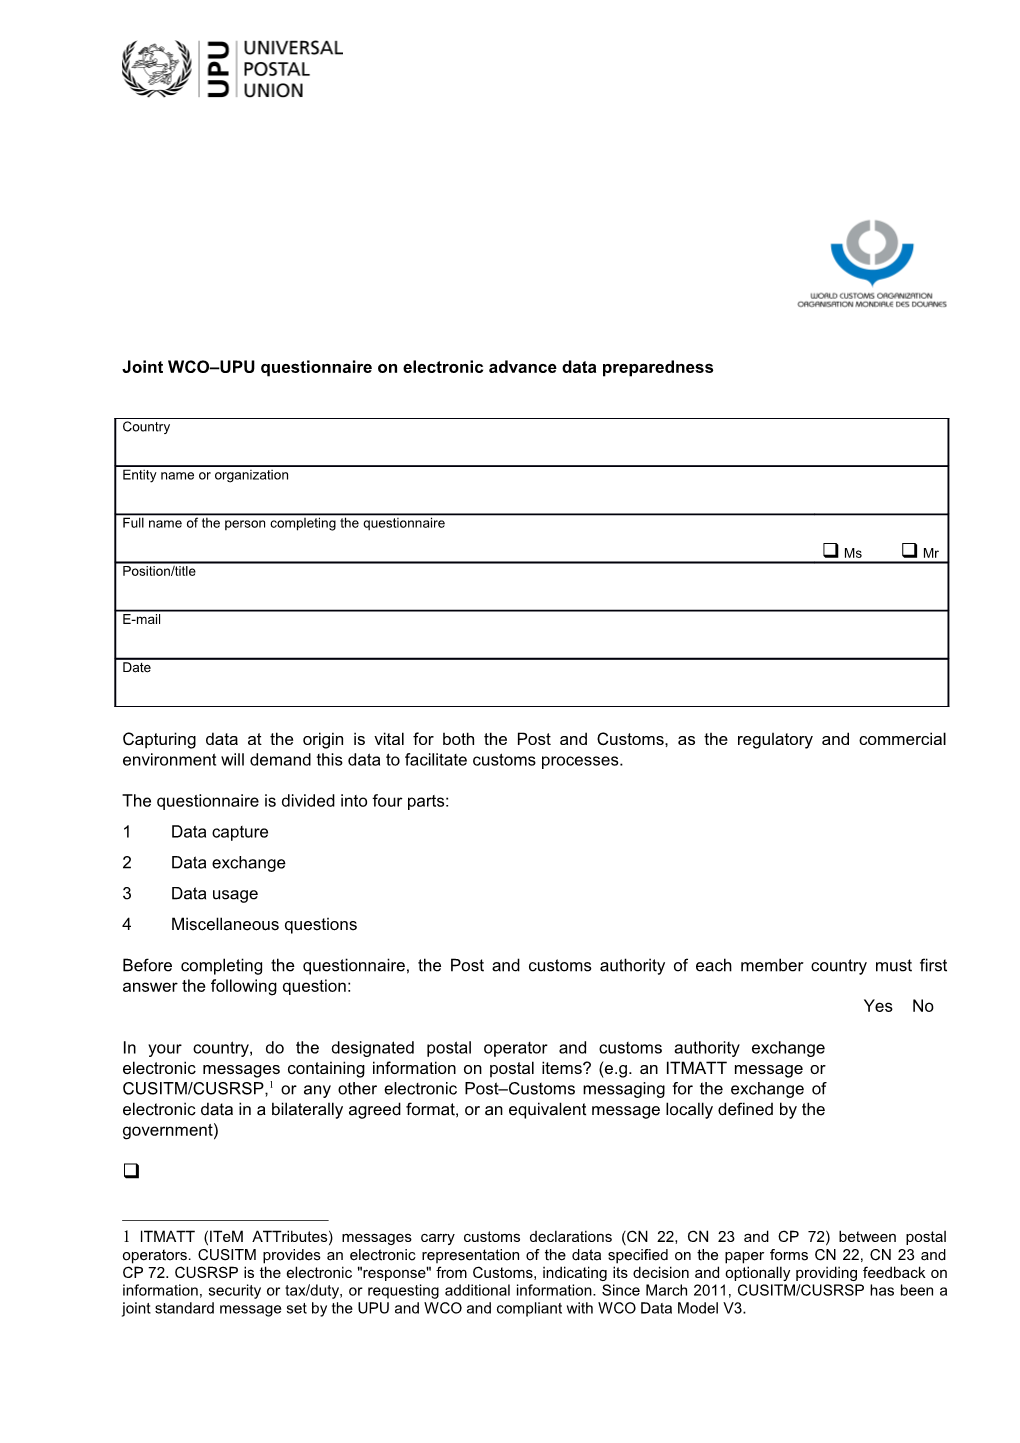 Joint WCO UPU Questionnaire on Electronic Advance Data Preparedness